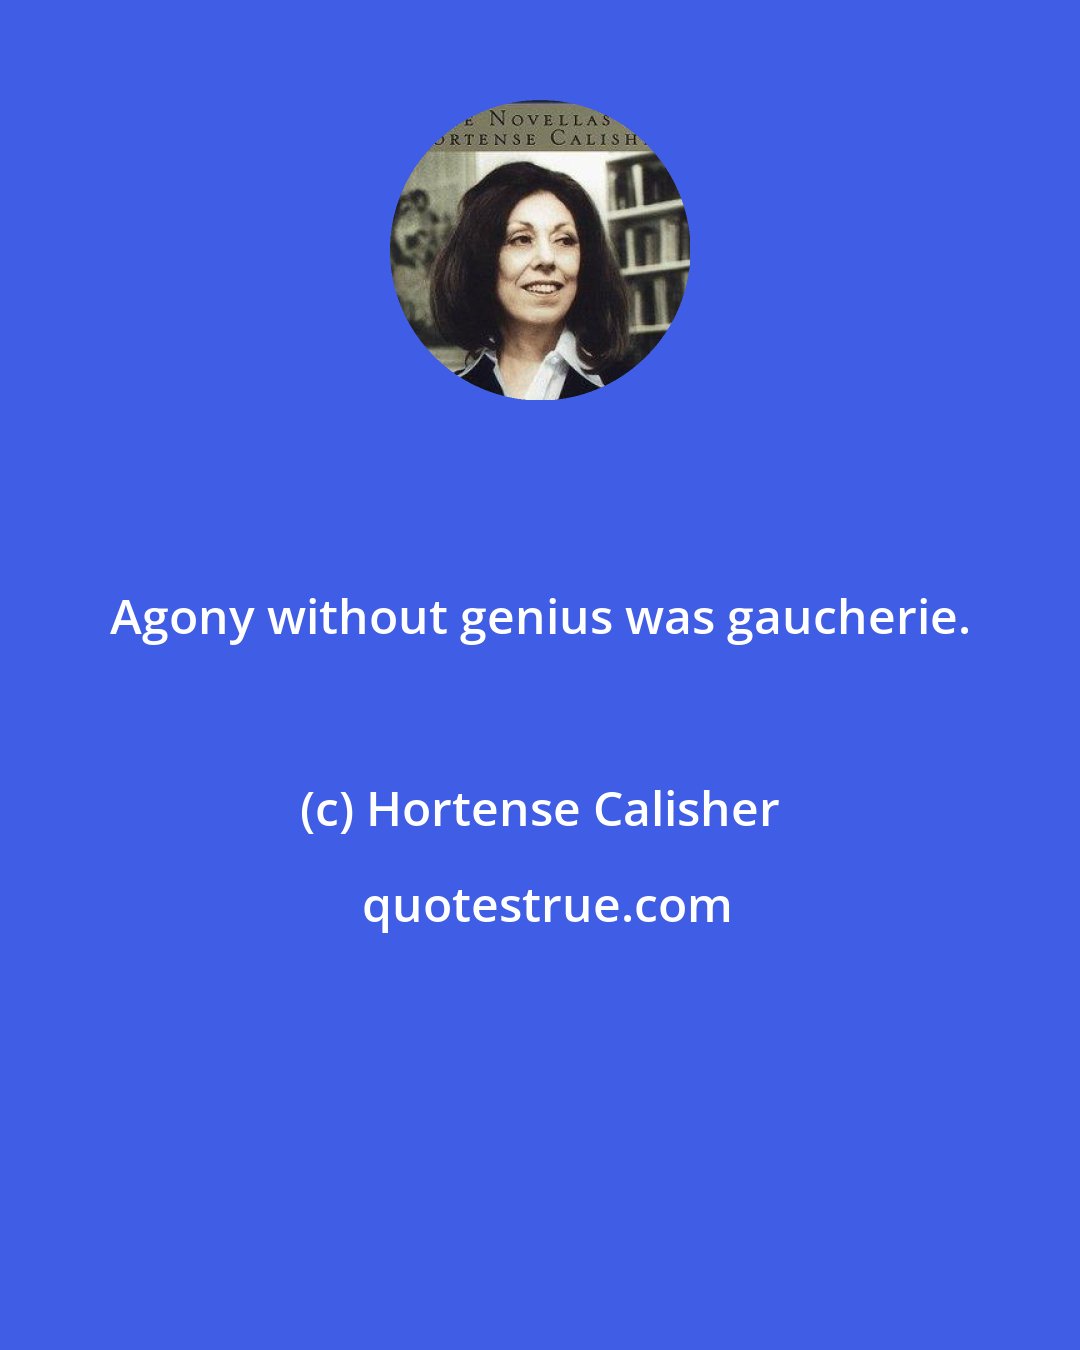 Hortense Calisher: Agony without genius was gaucherie.